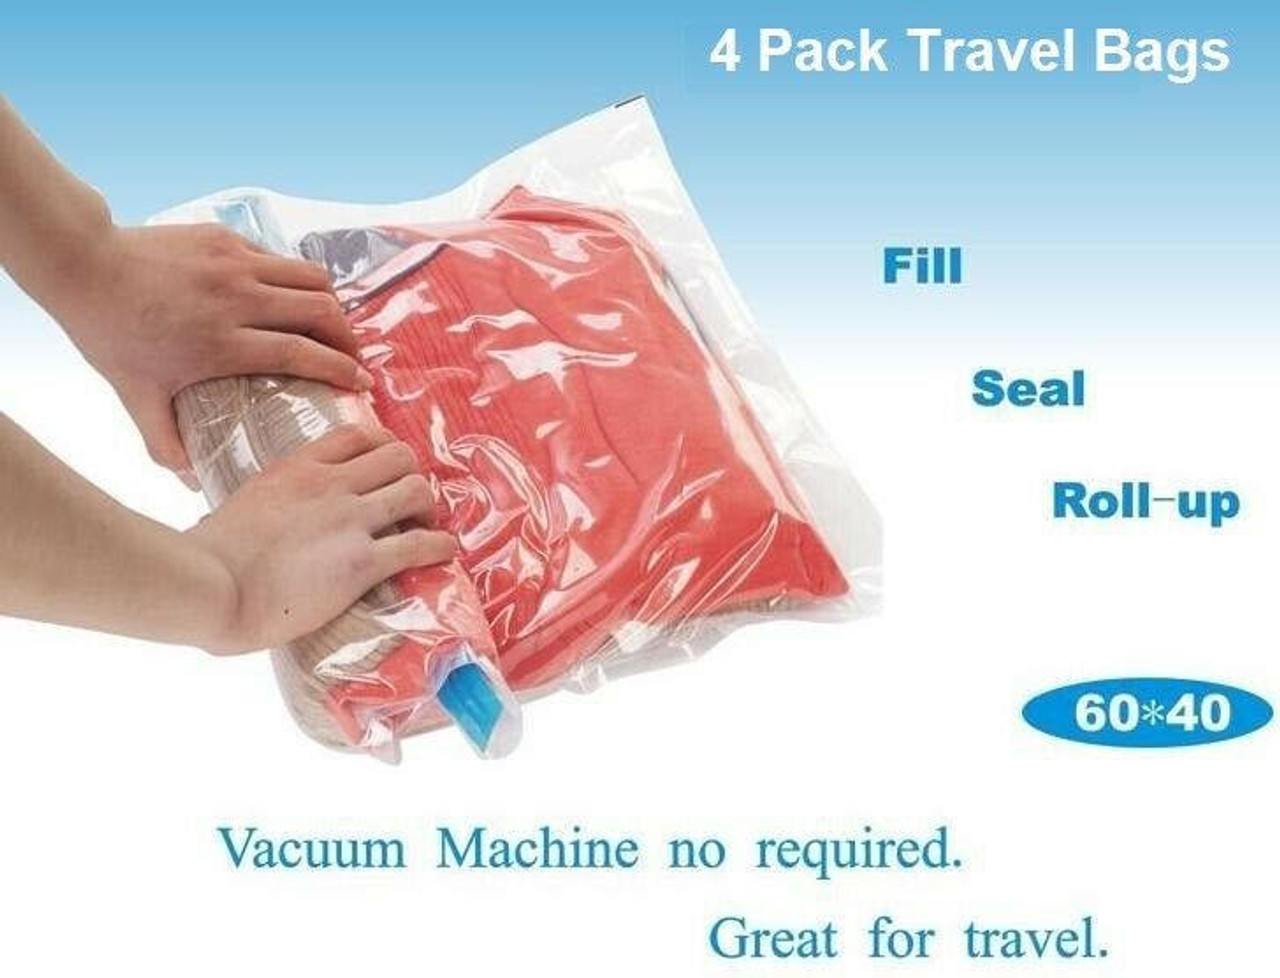 Lavish Home Medium Space Saving Vacuum Storage Bags (5-Pack